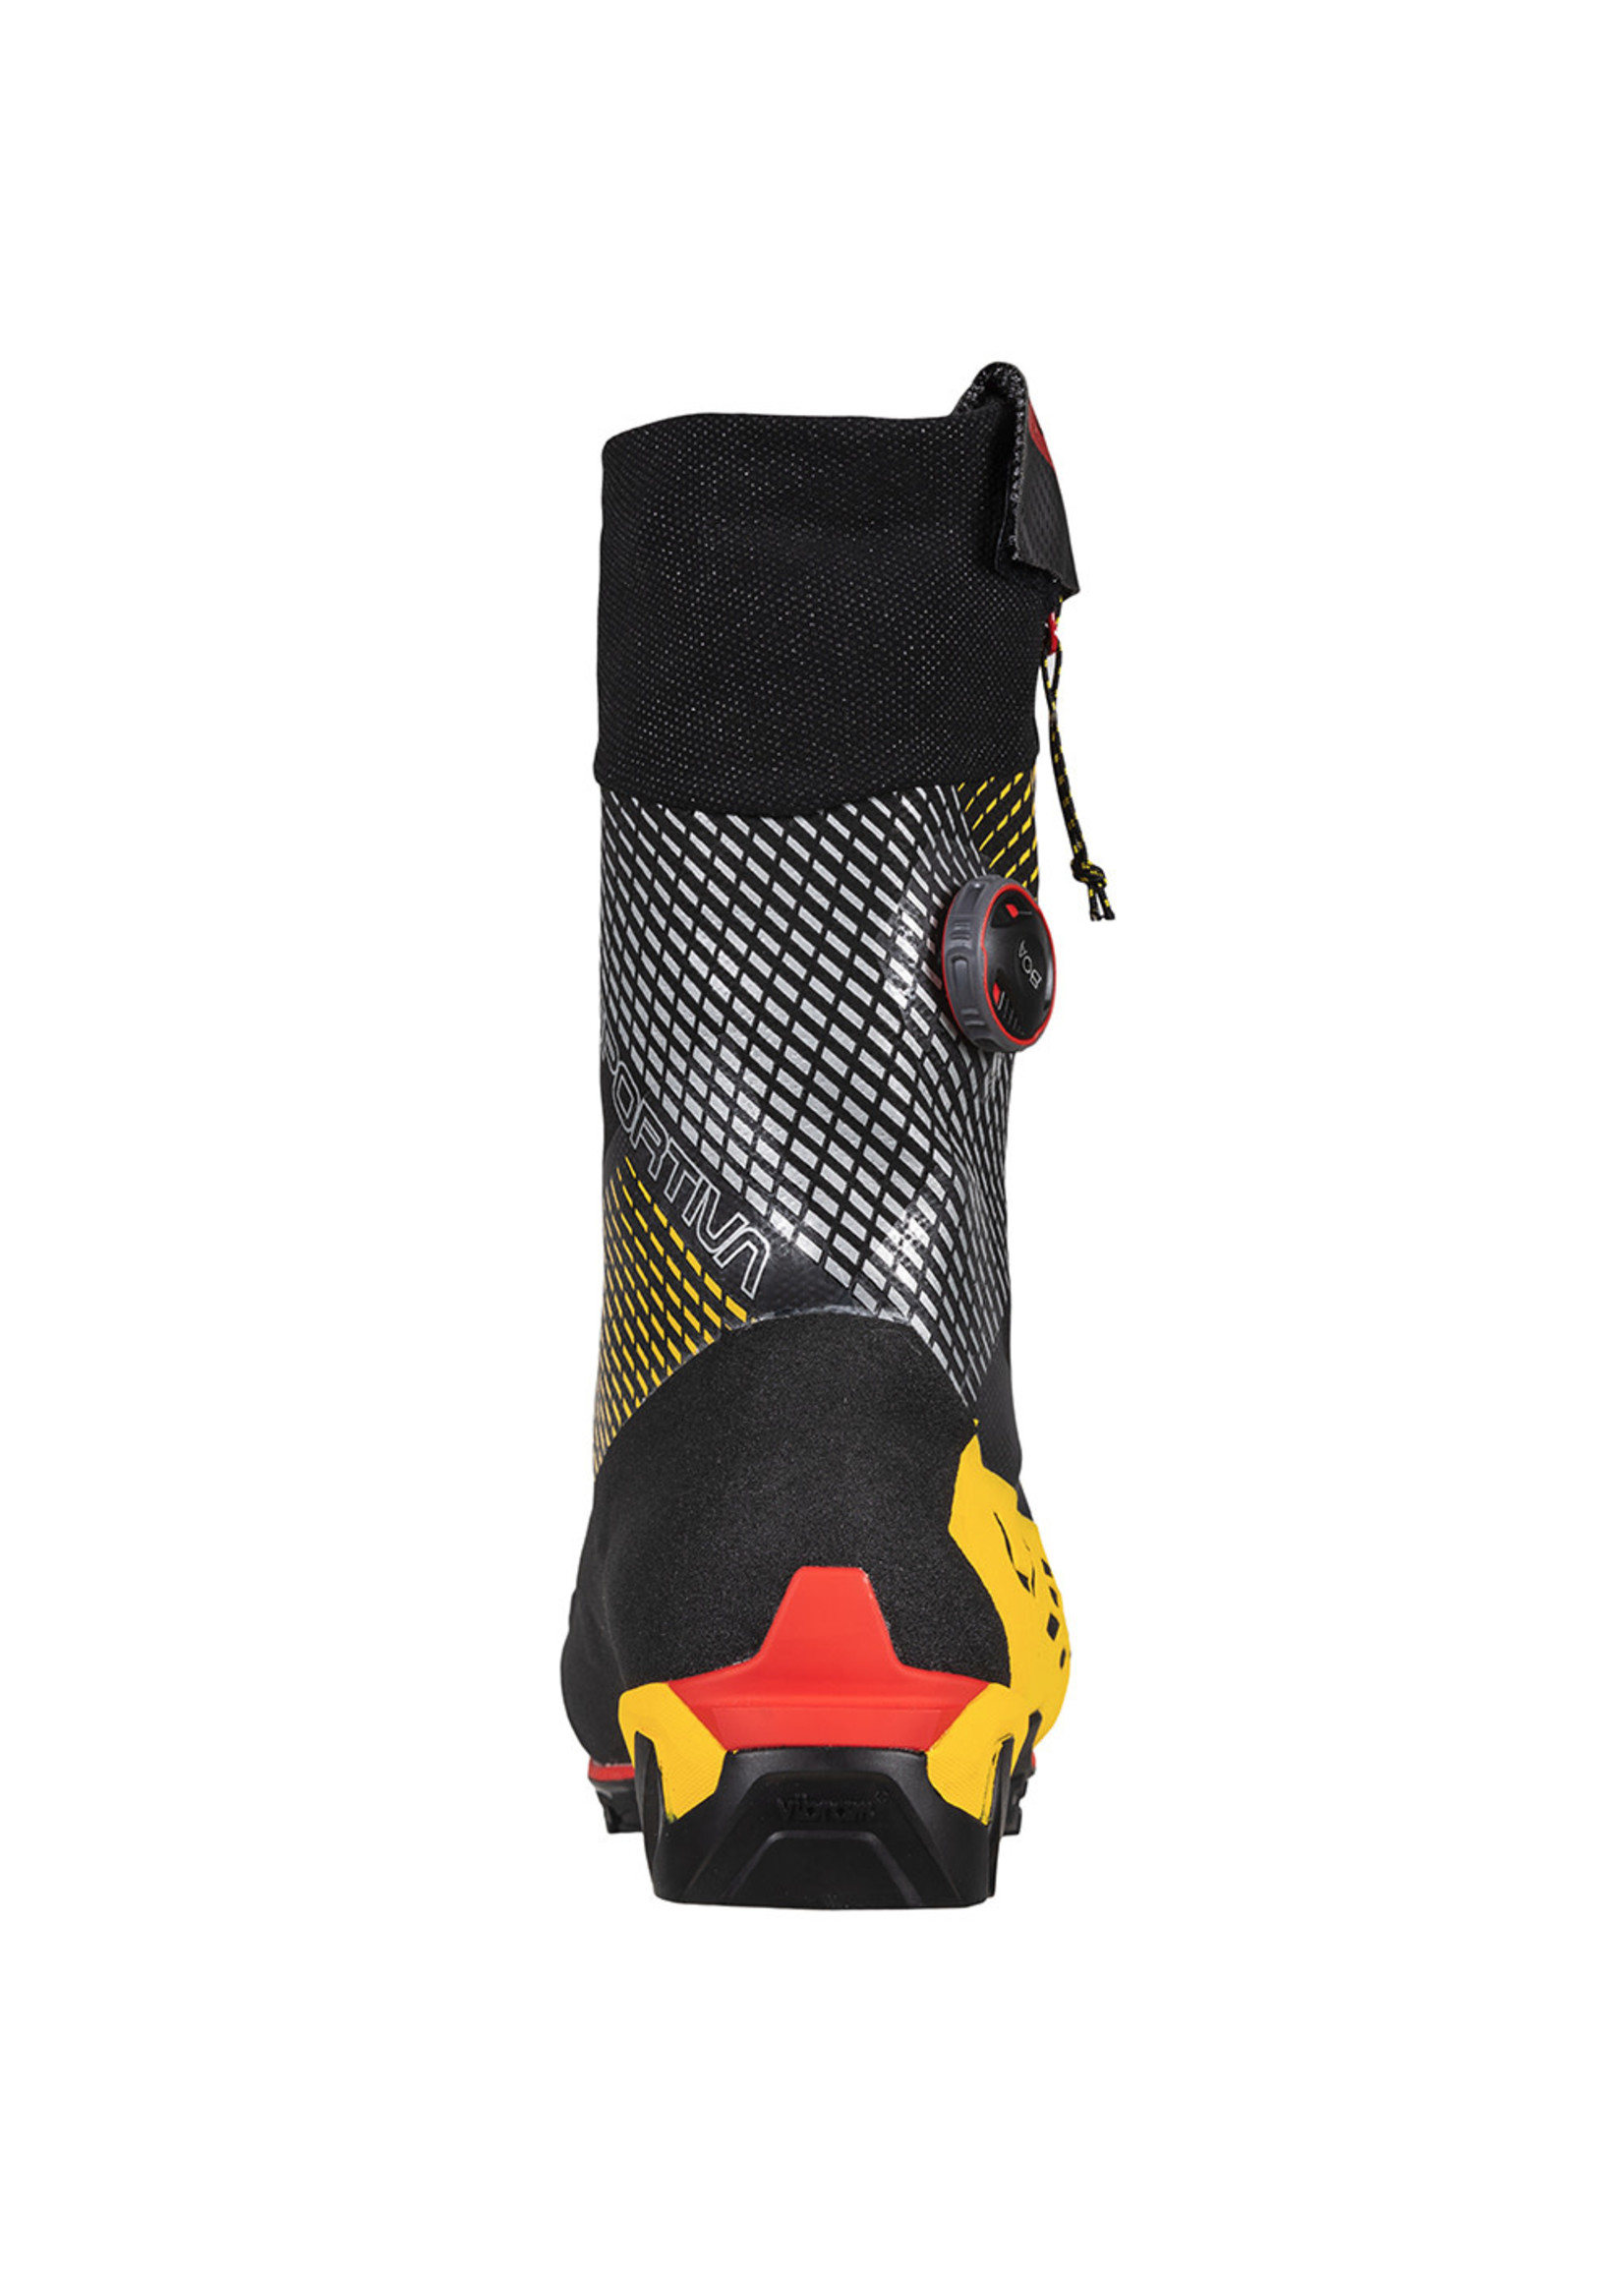 La Sportiva G-Tech Mountaineering Boot Review – Climb On Equipment